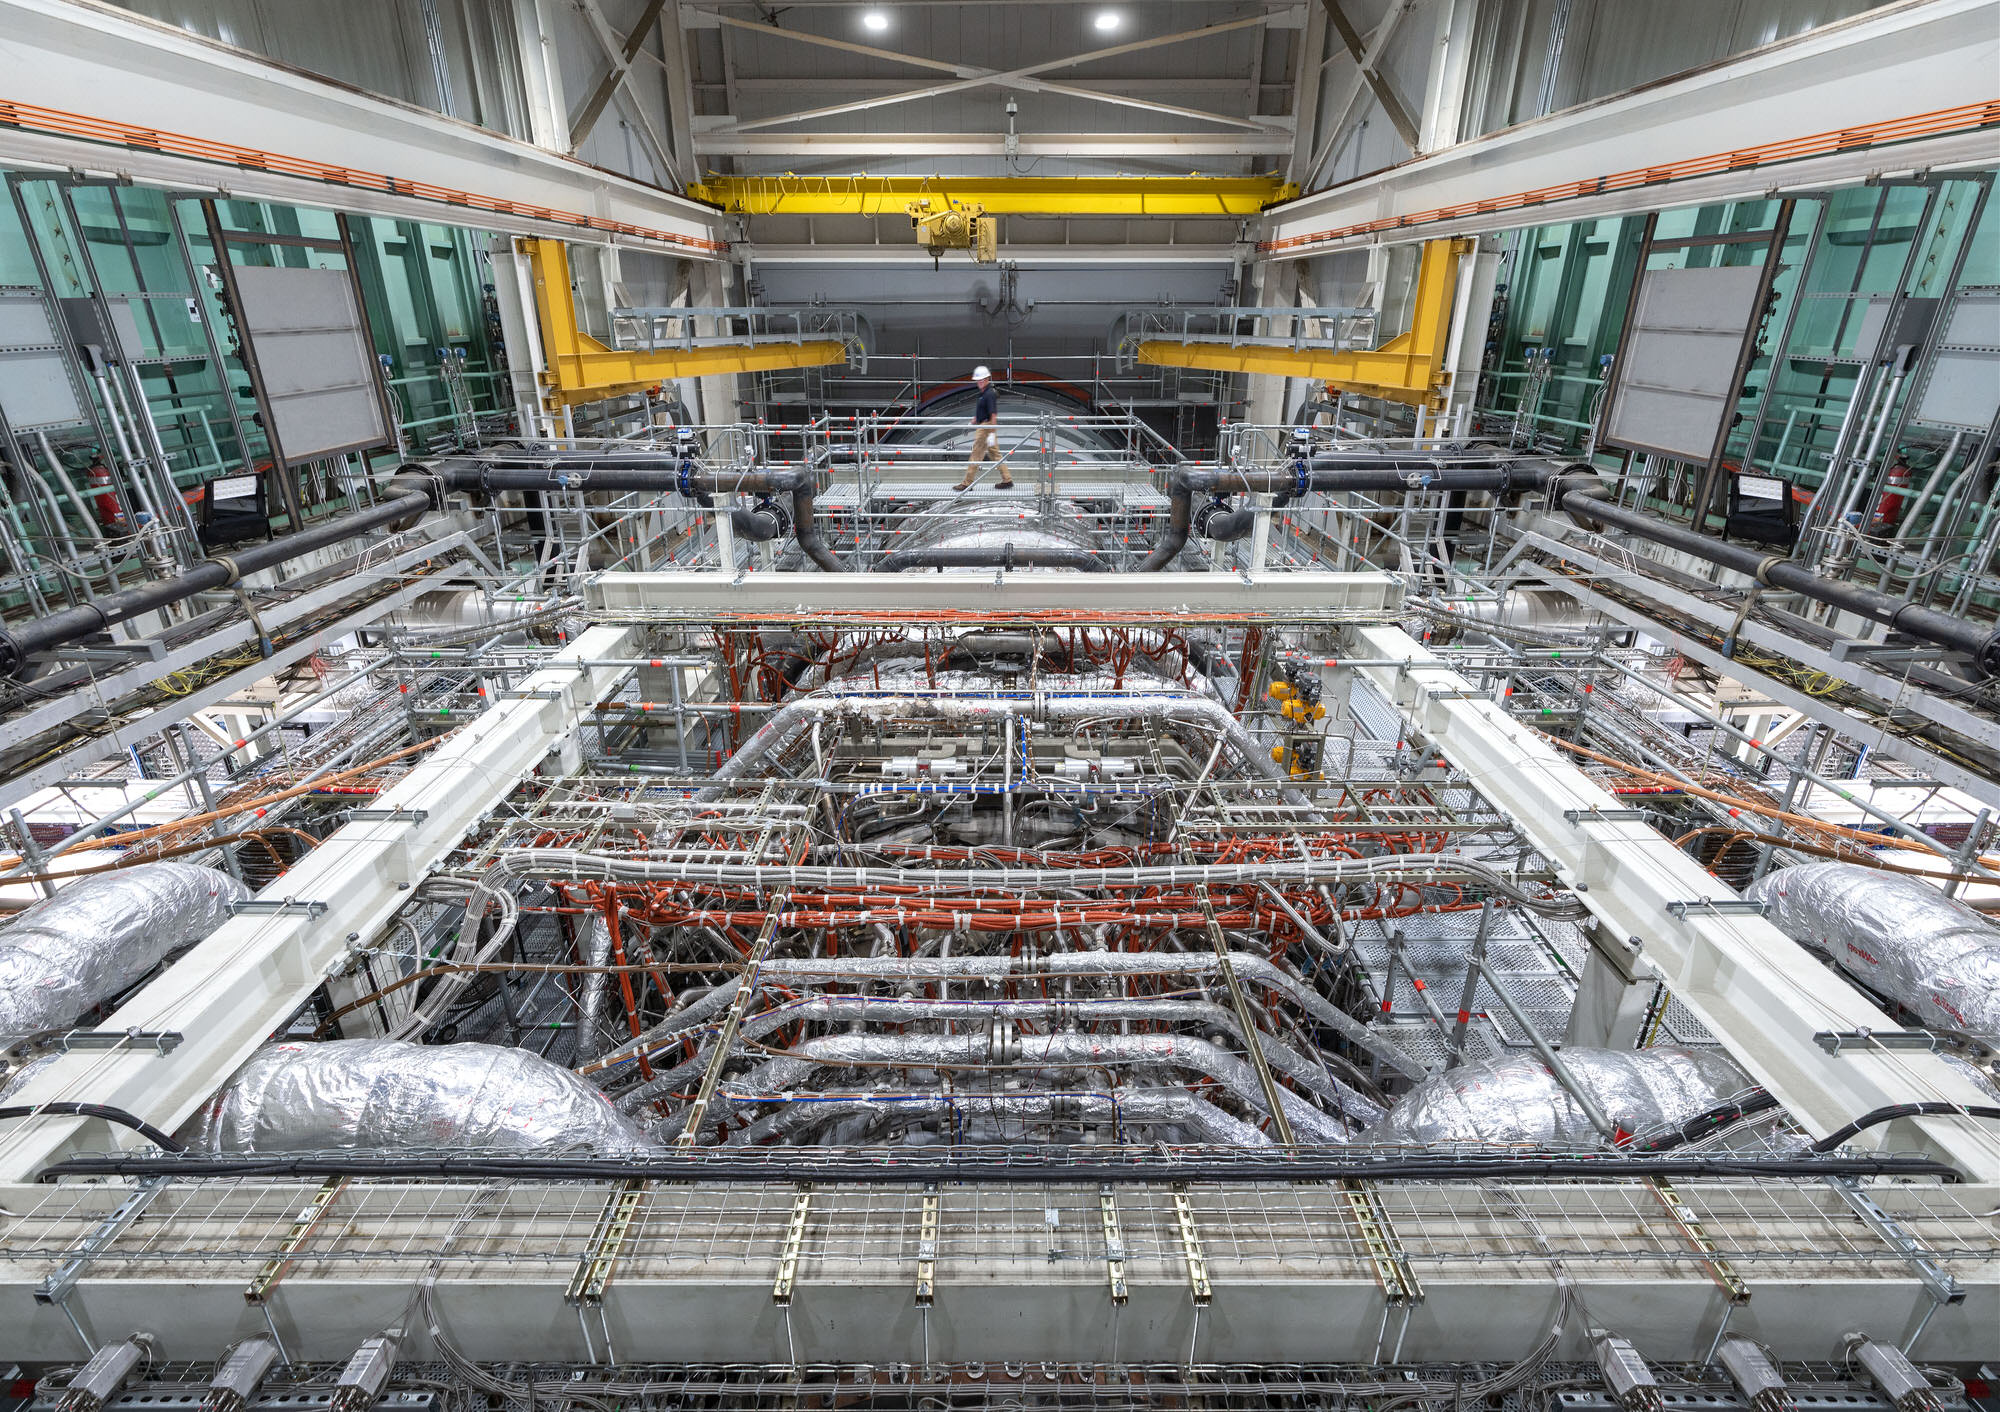 General Electric Gas Turbine testing facility in Greenville, South Carolina